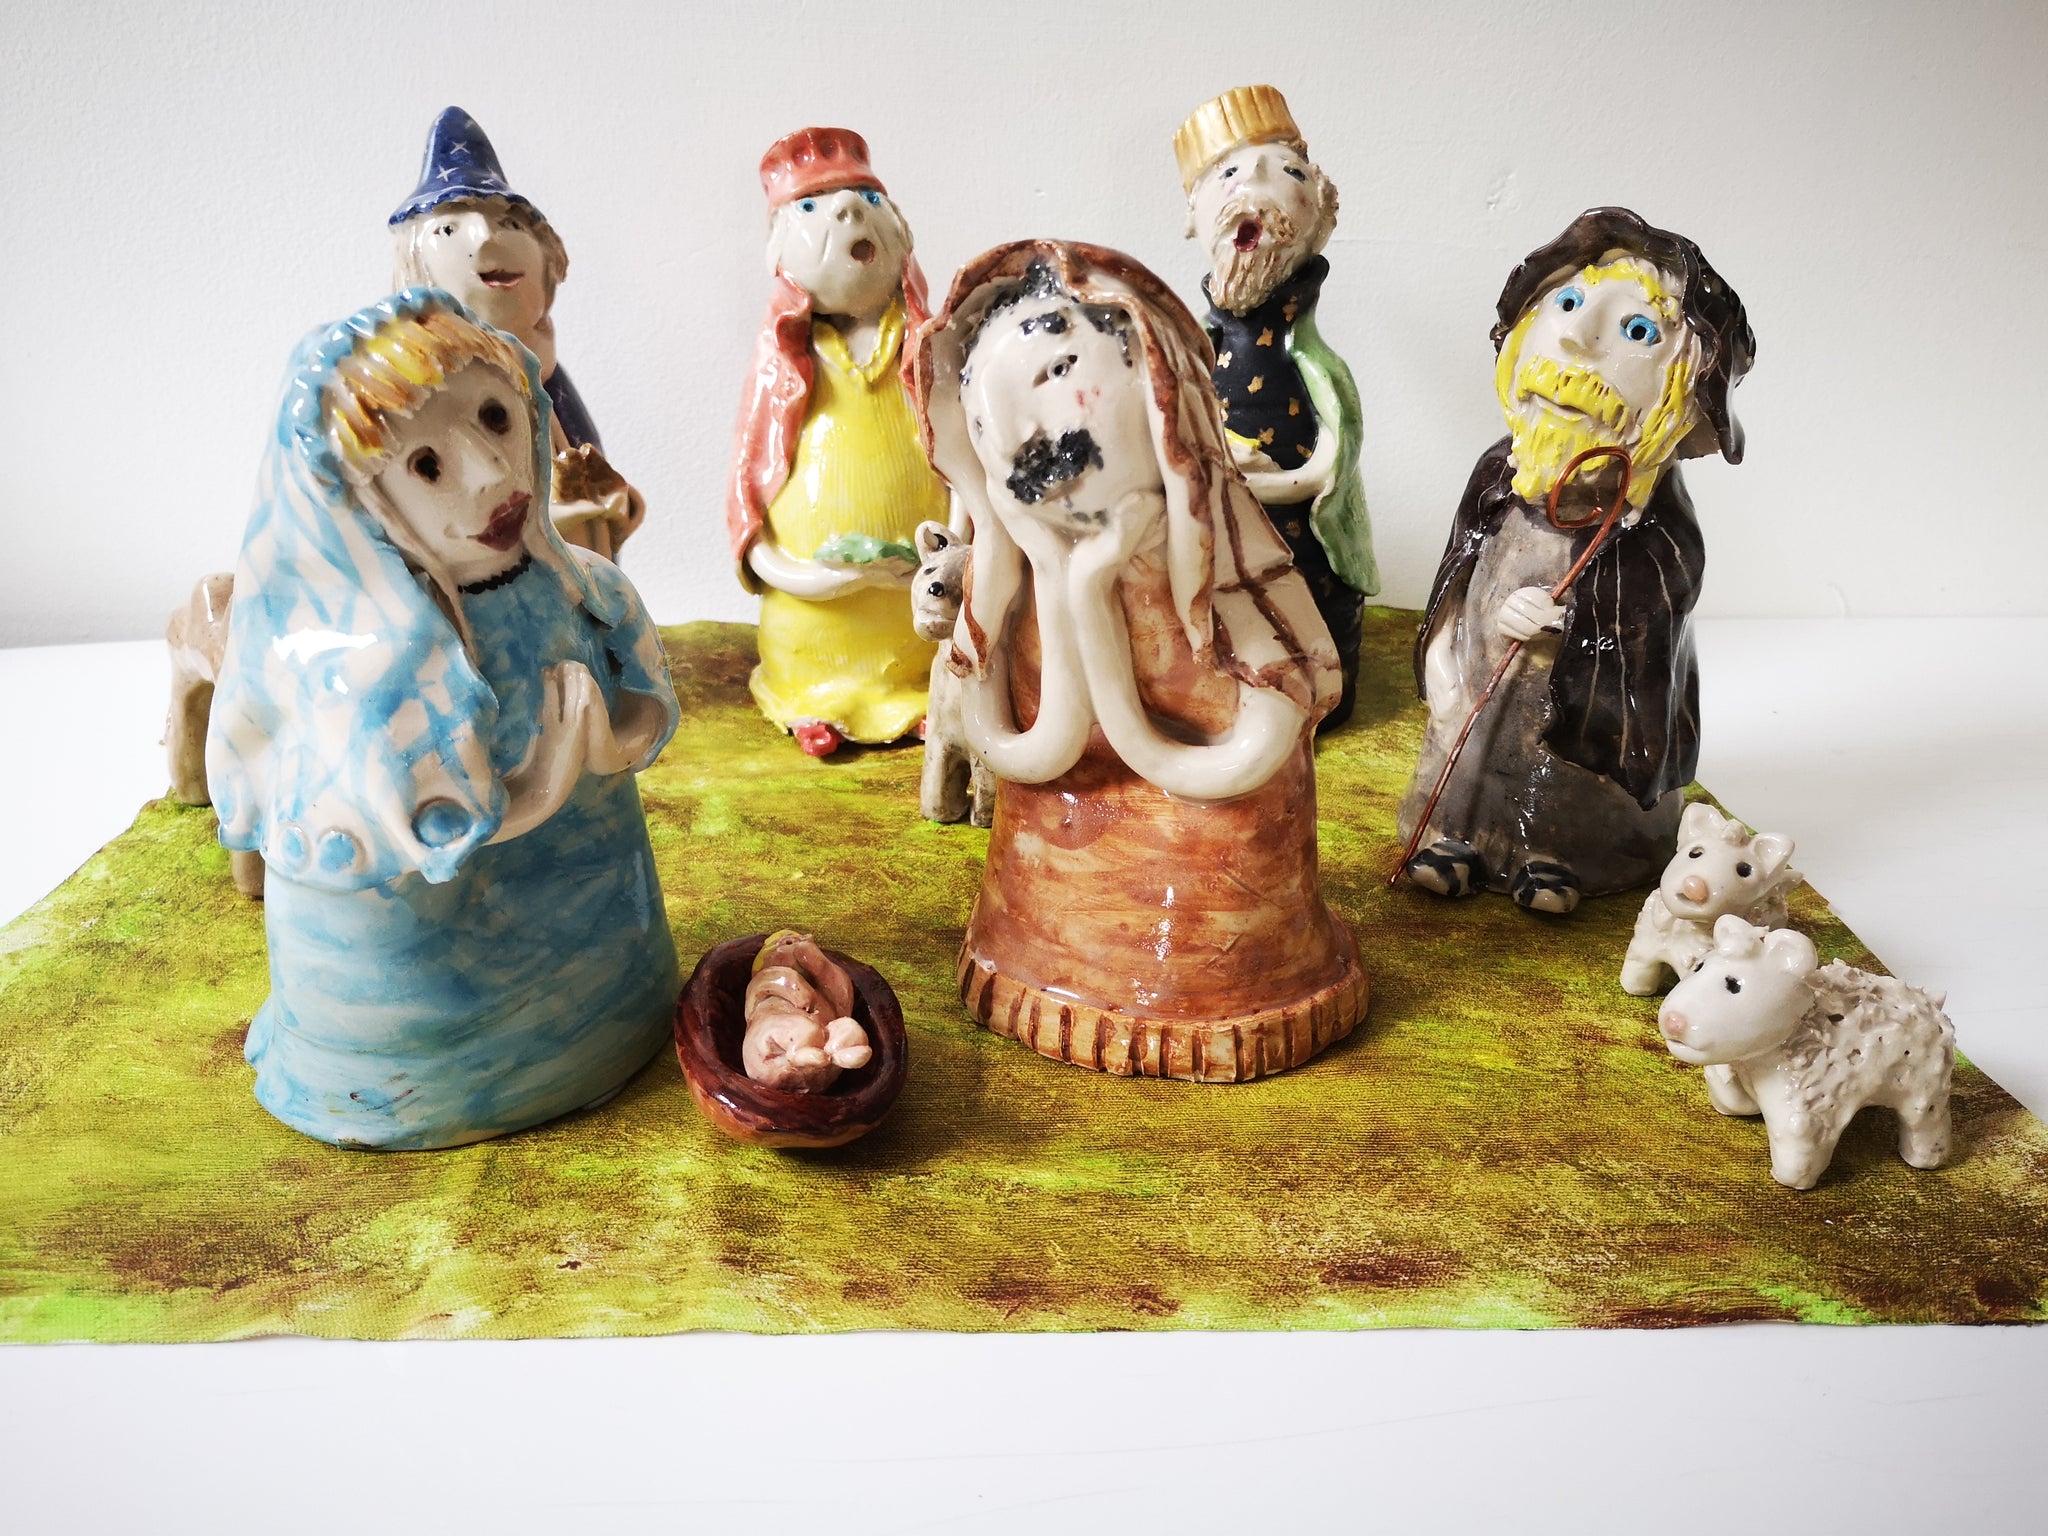 Nativity scene by Vivien Phelan Skylark Galleries